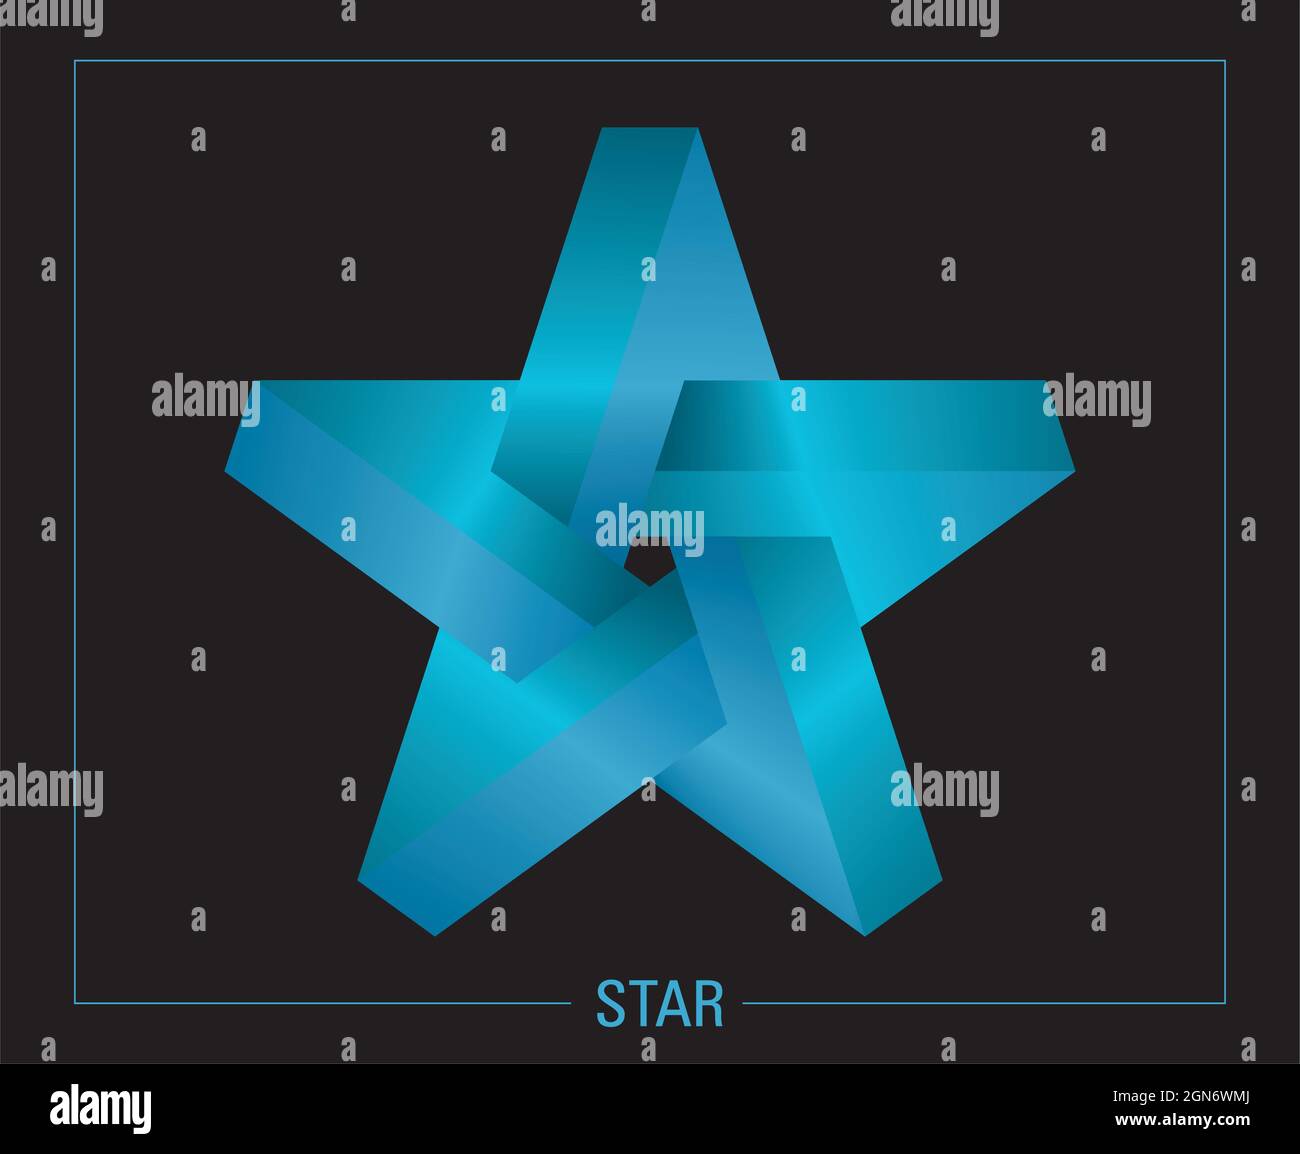 Blauer stern im dreidimensionalen Design. Vektorgrafik. EPS10. Stock Vektor